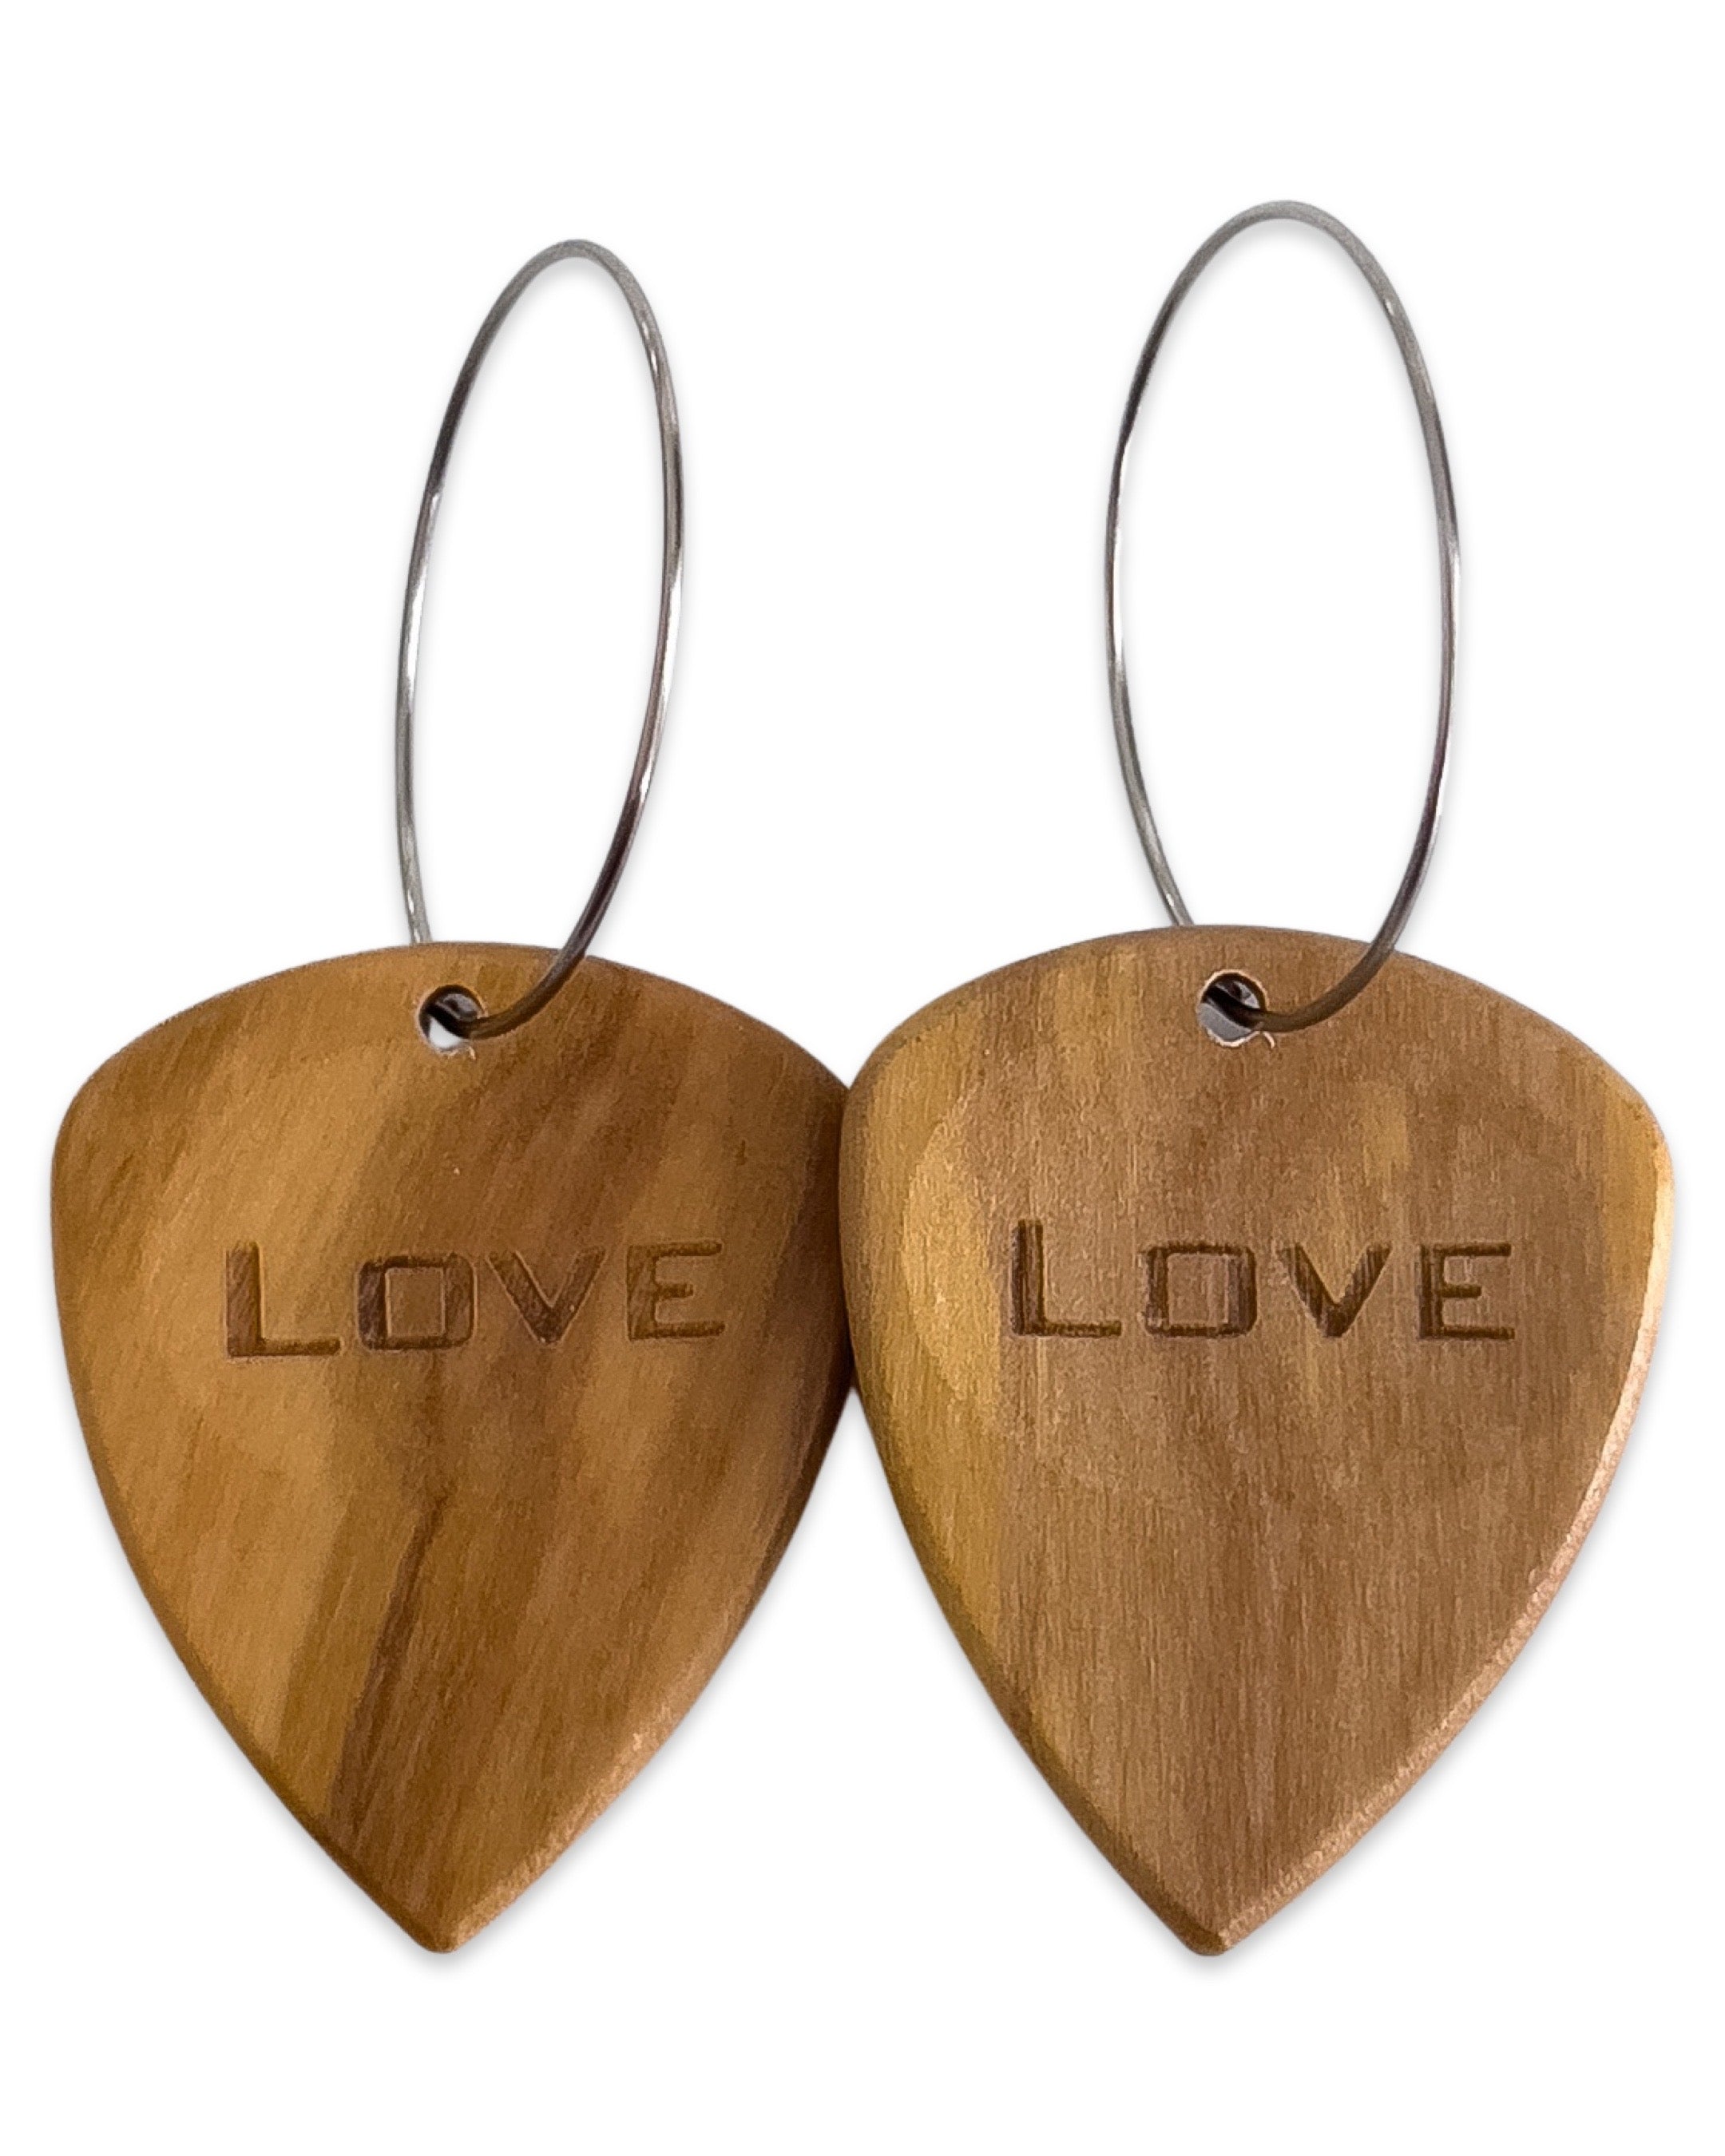 Groupie Love Olive Wood Single Guitar Pick Earrings